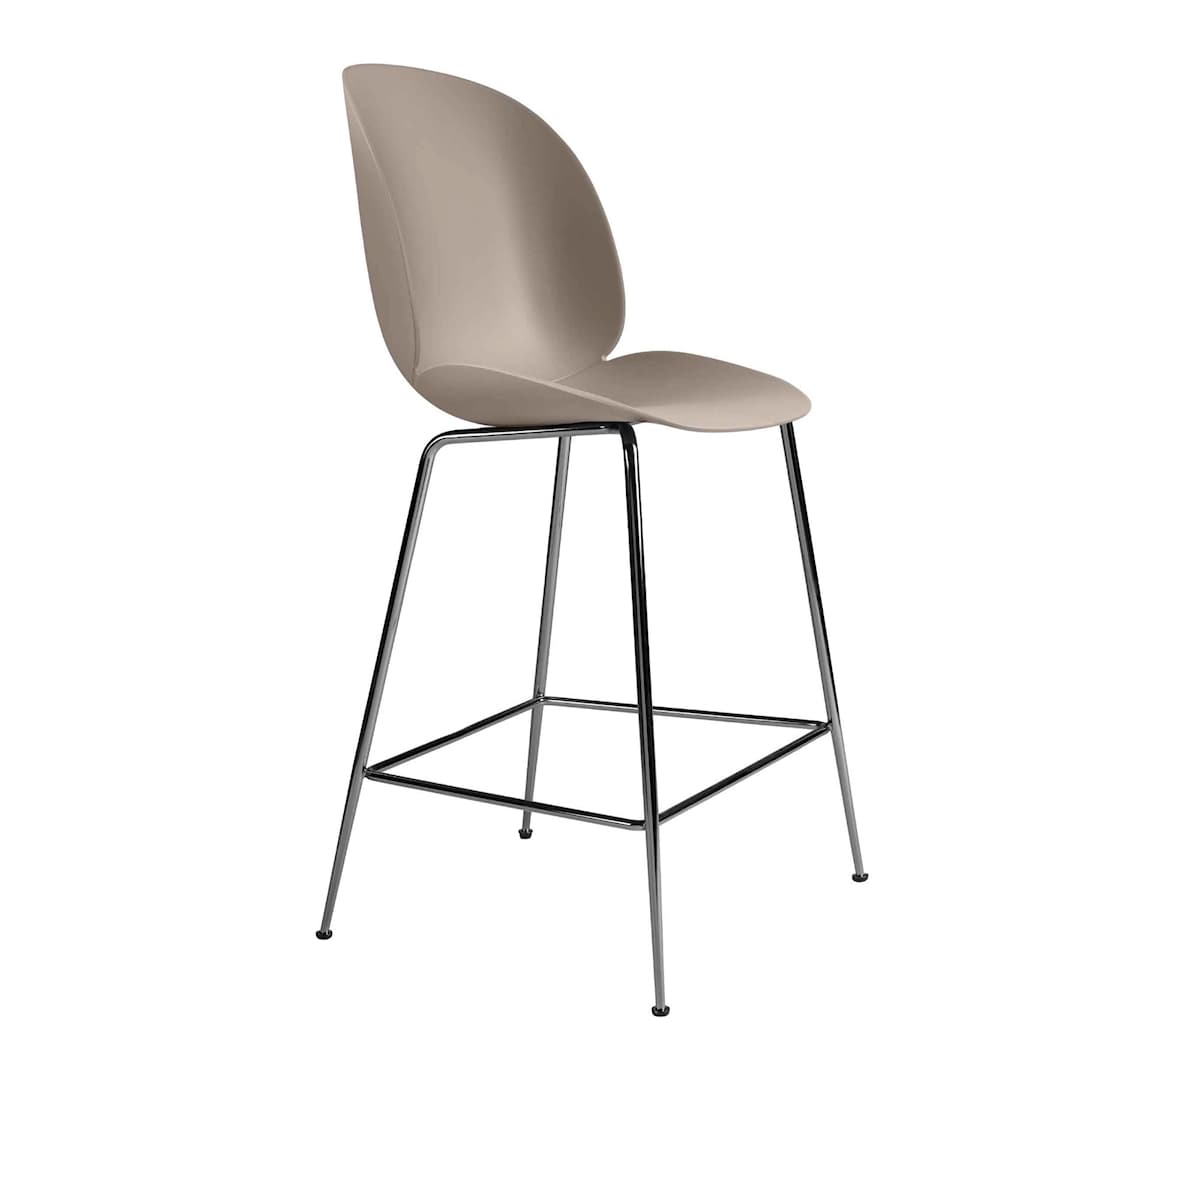 Beetle Bar/Counter Chair - Un-upholstered